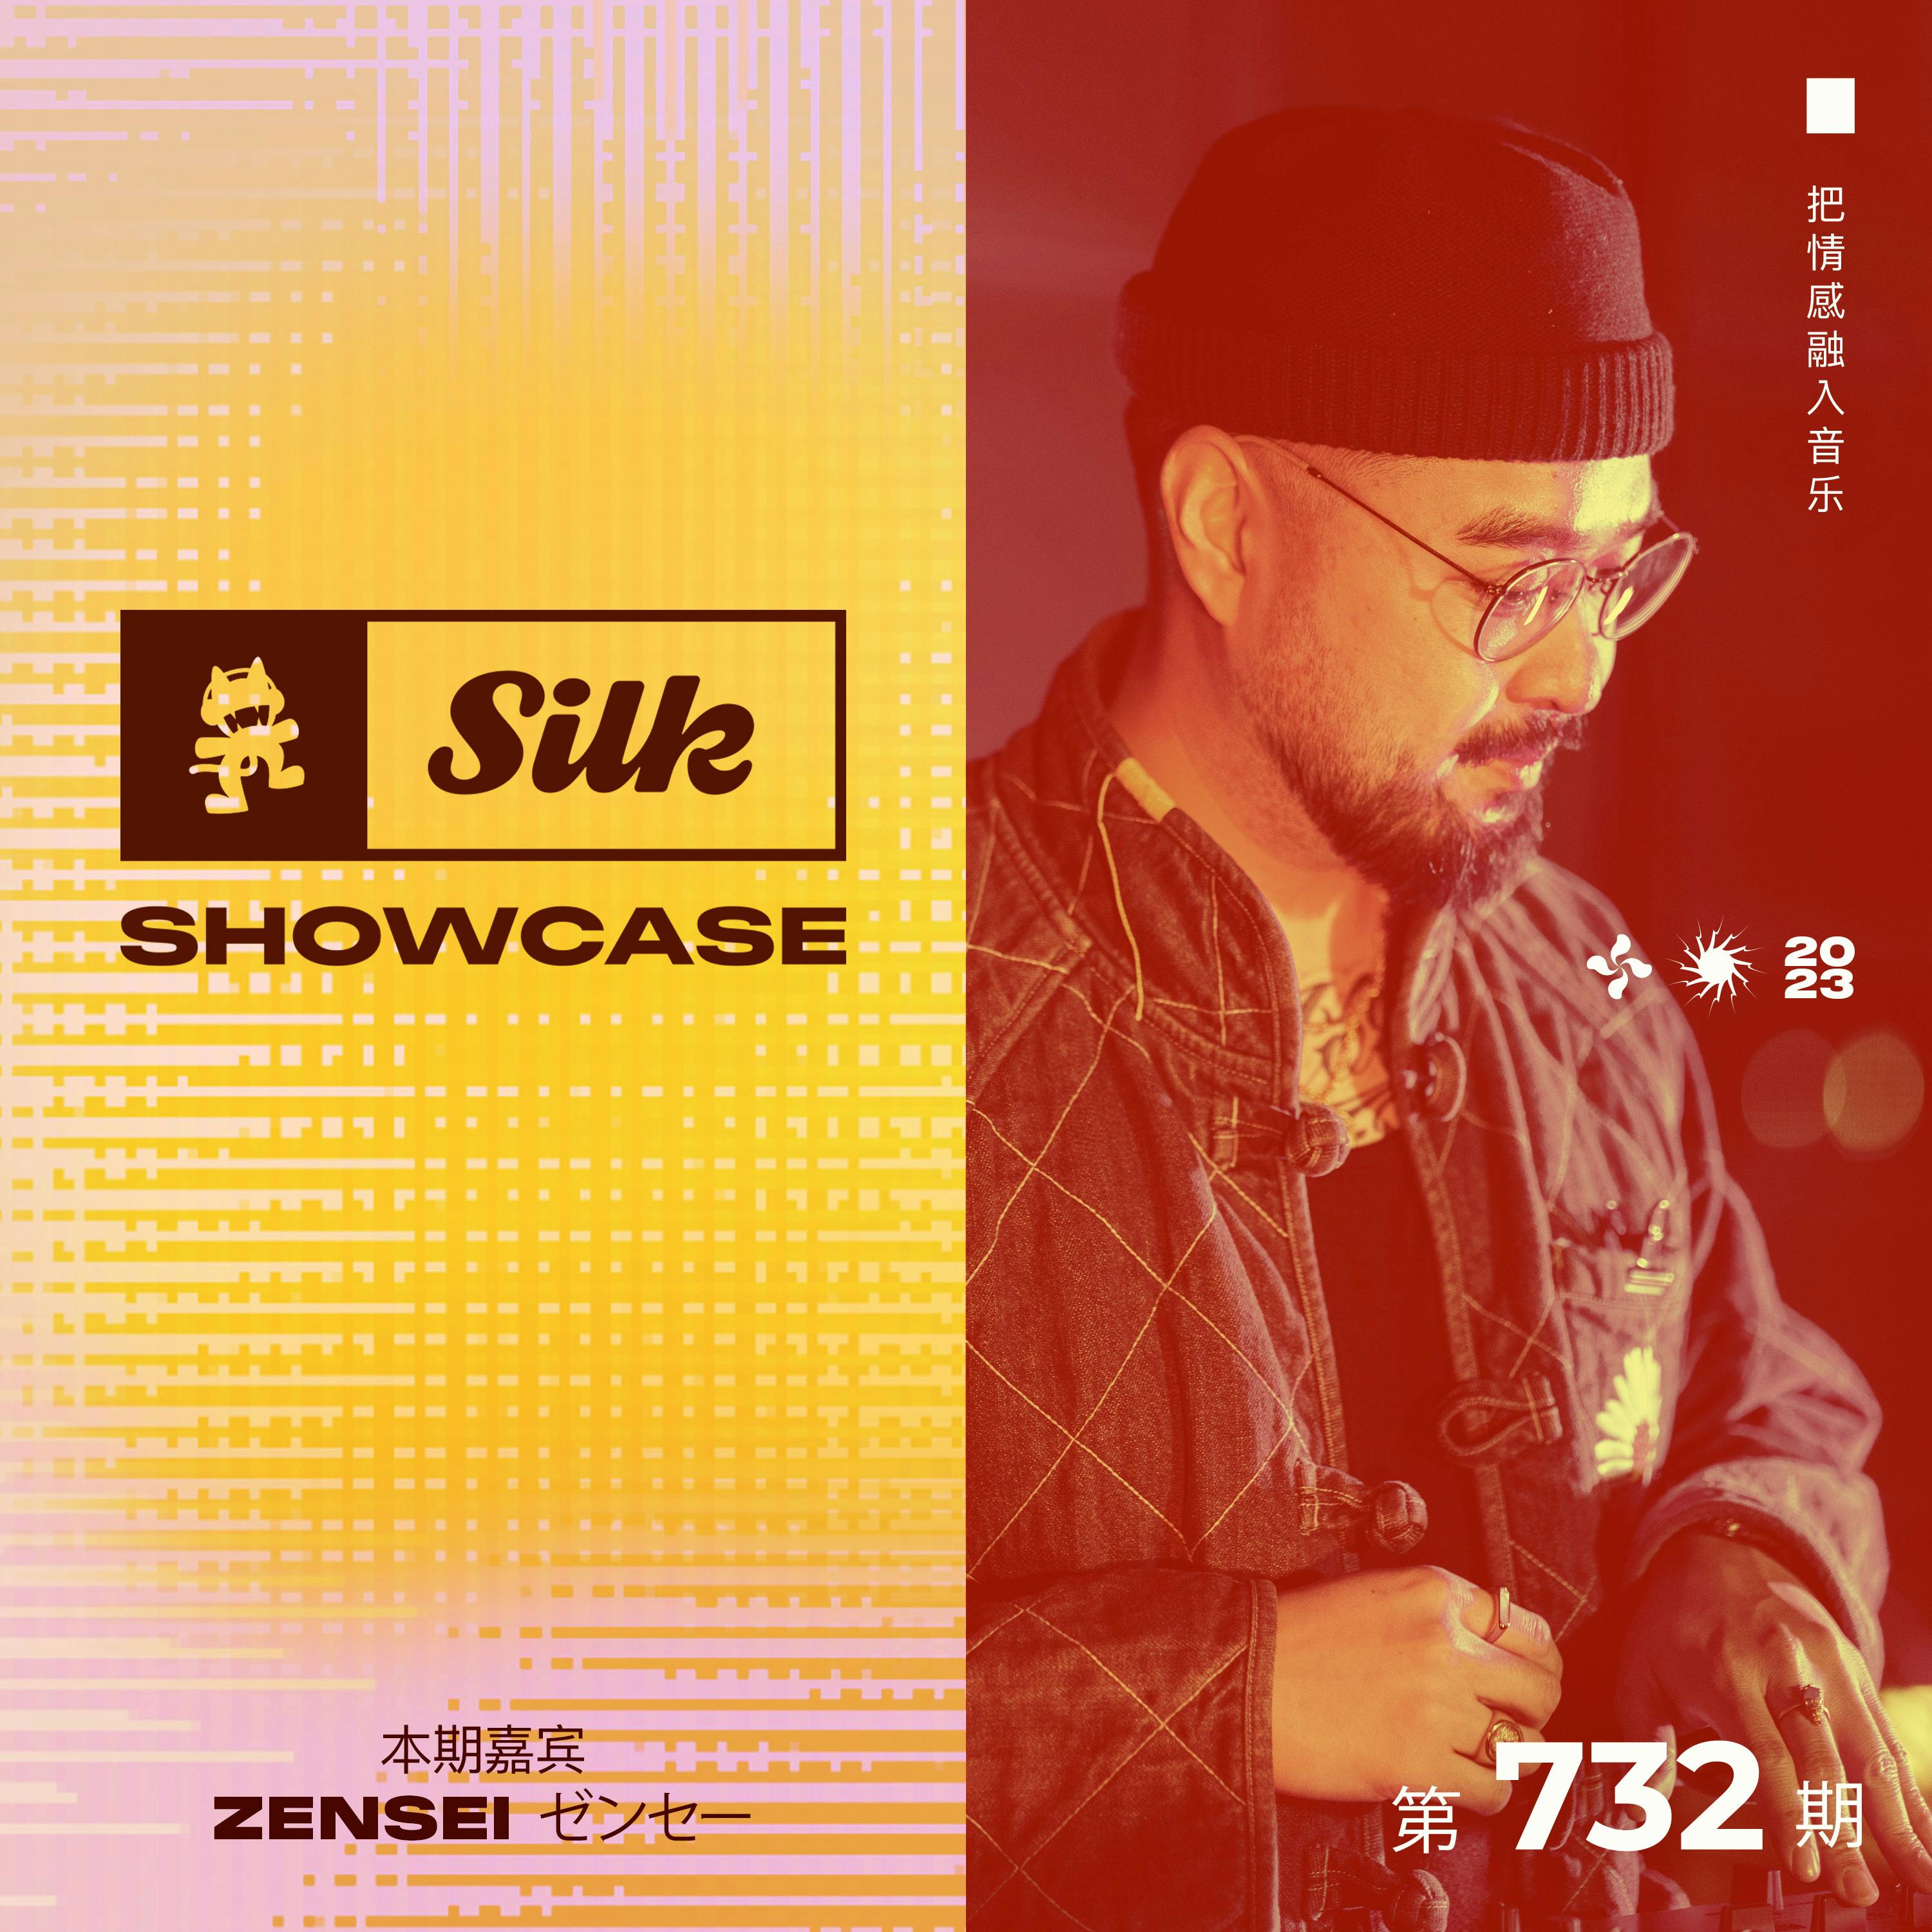 Monstercat Silk Showcase 732 (Hosted by zensei ゼンセー)